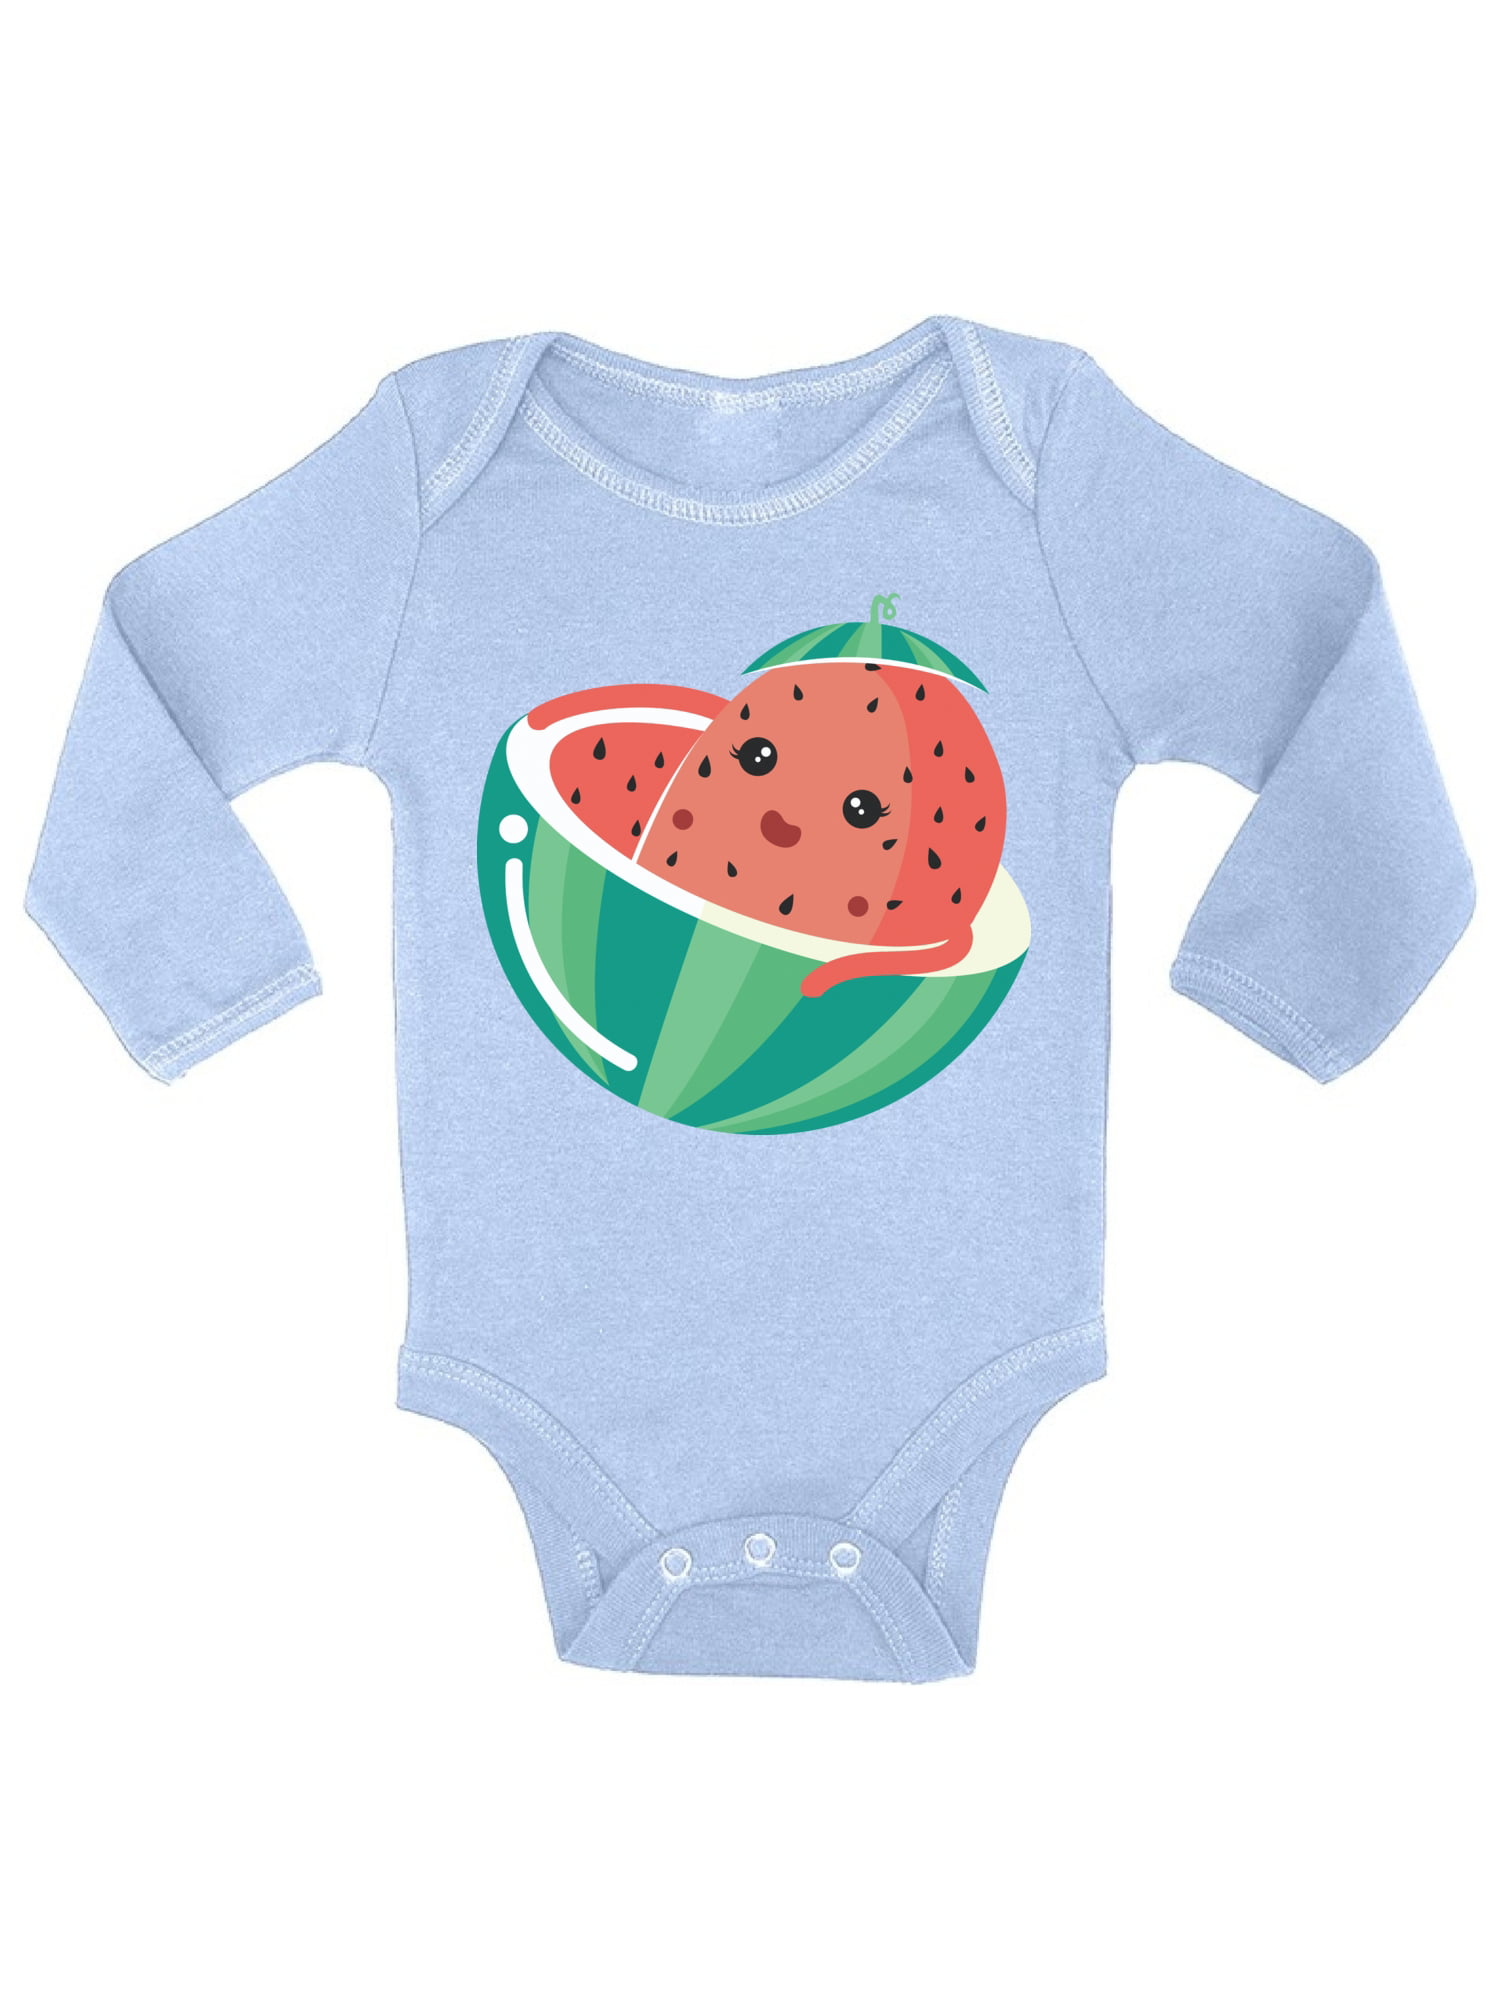 watermelon baby romper